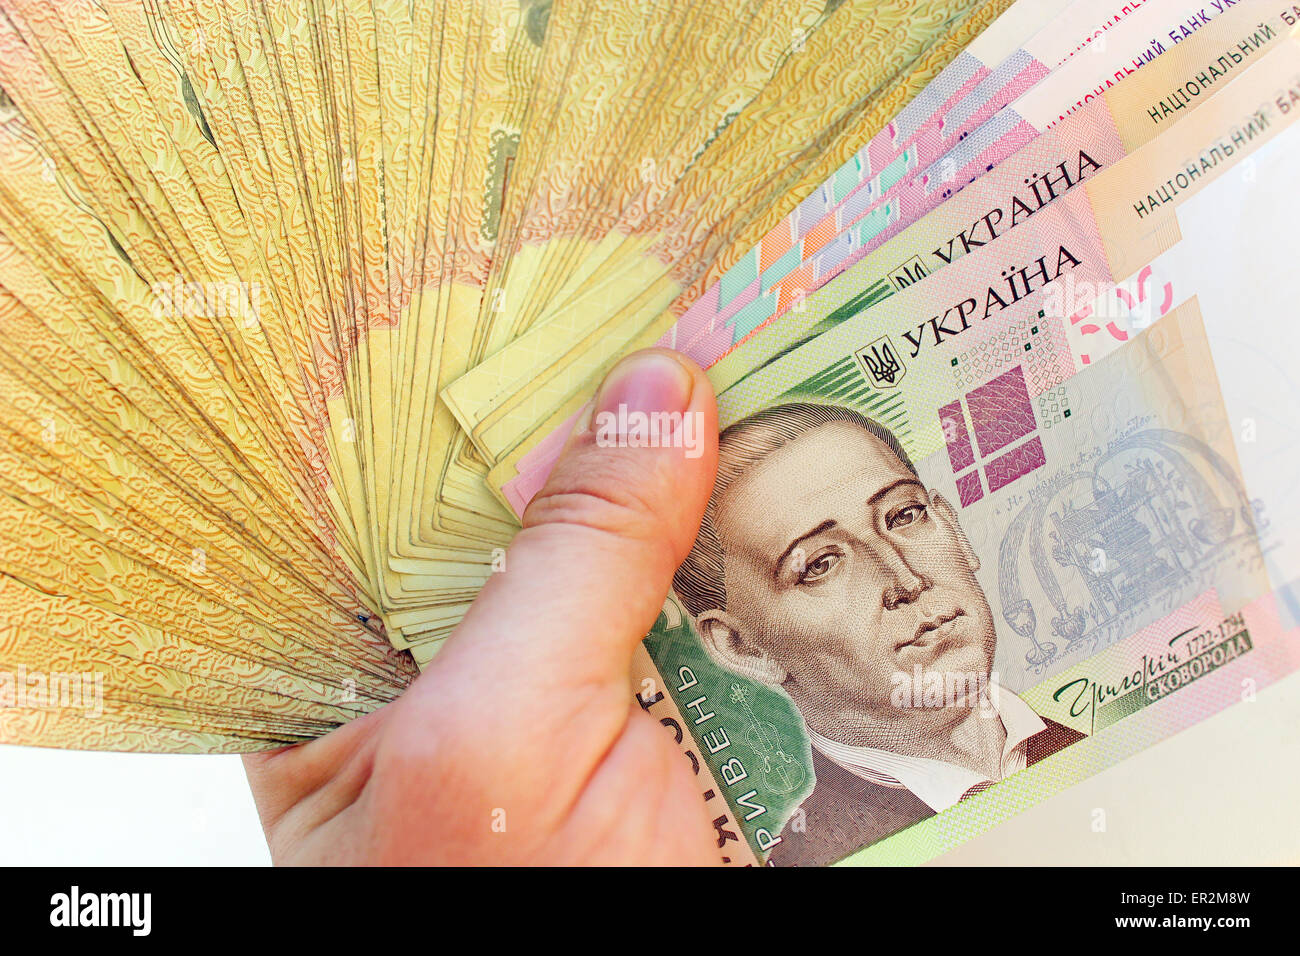 Ukrainian money of value 100 in the hand Stock Photo